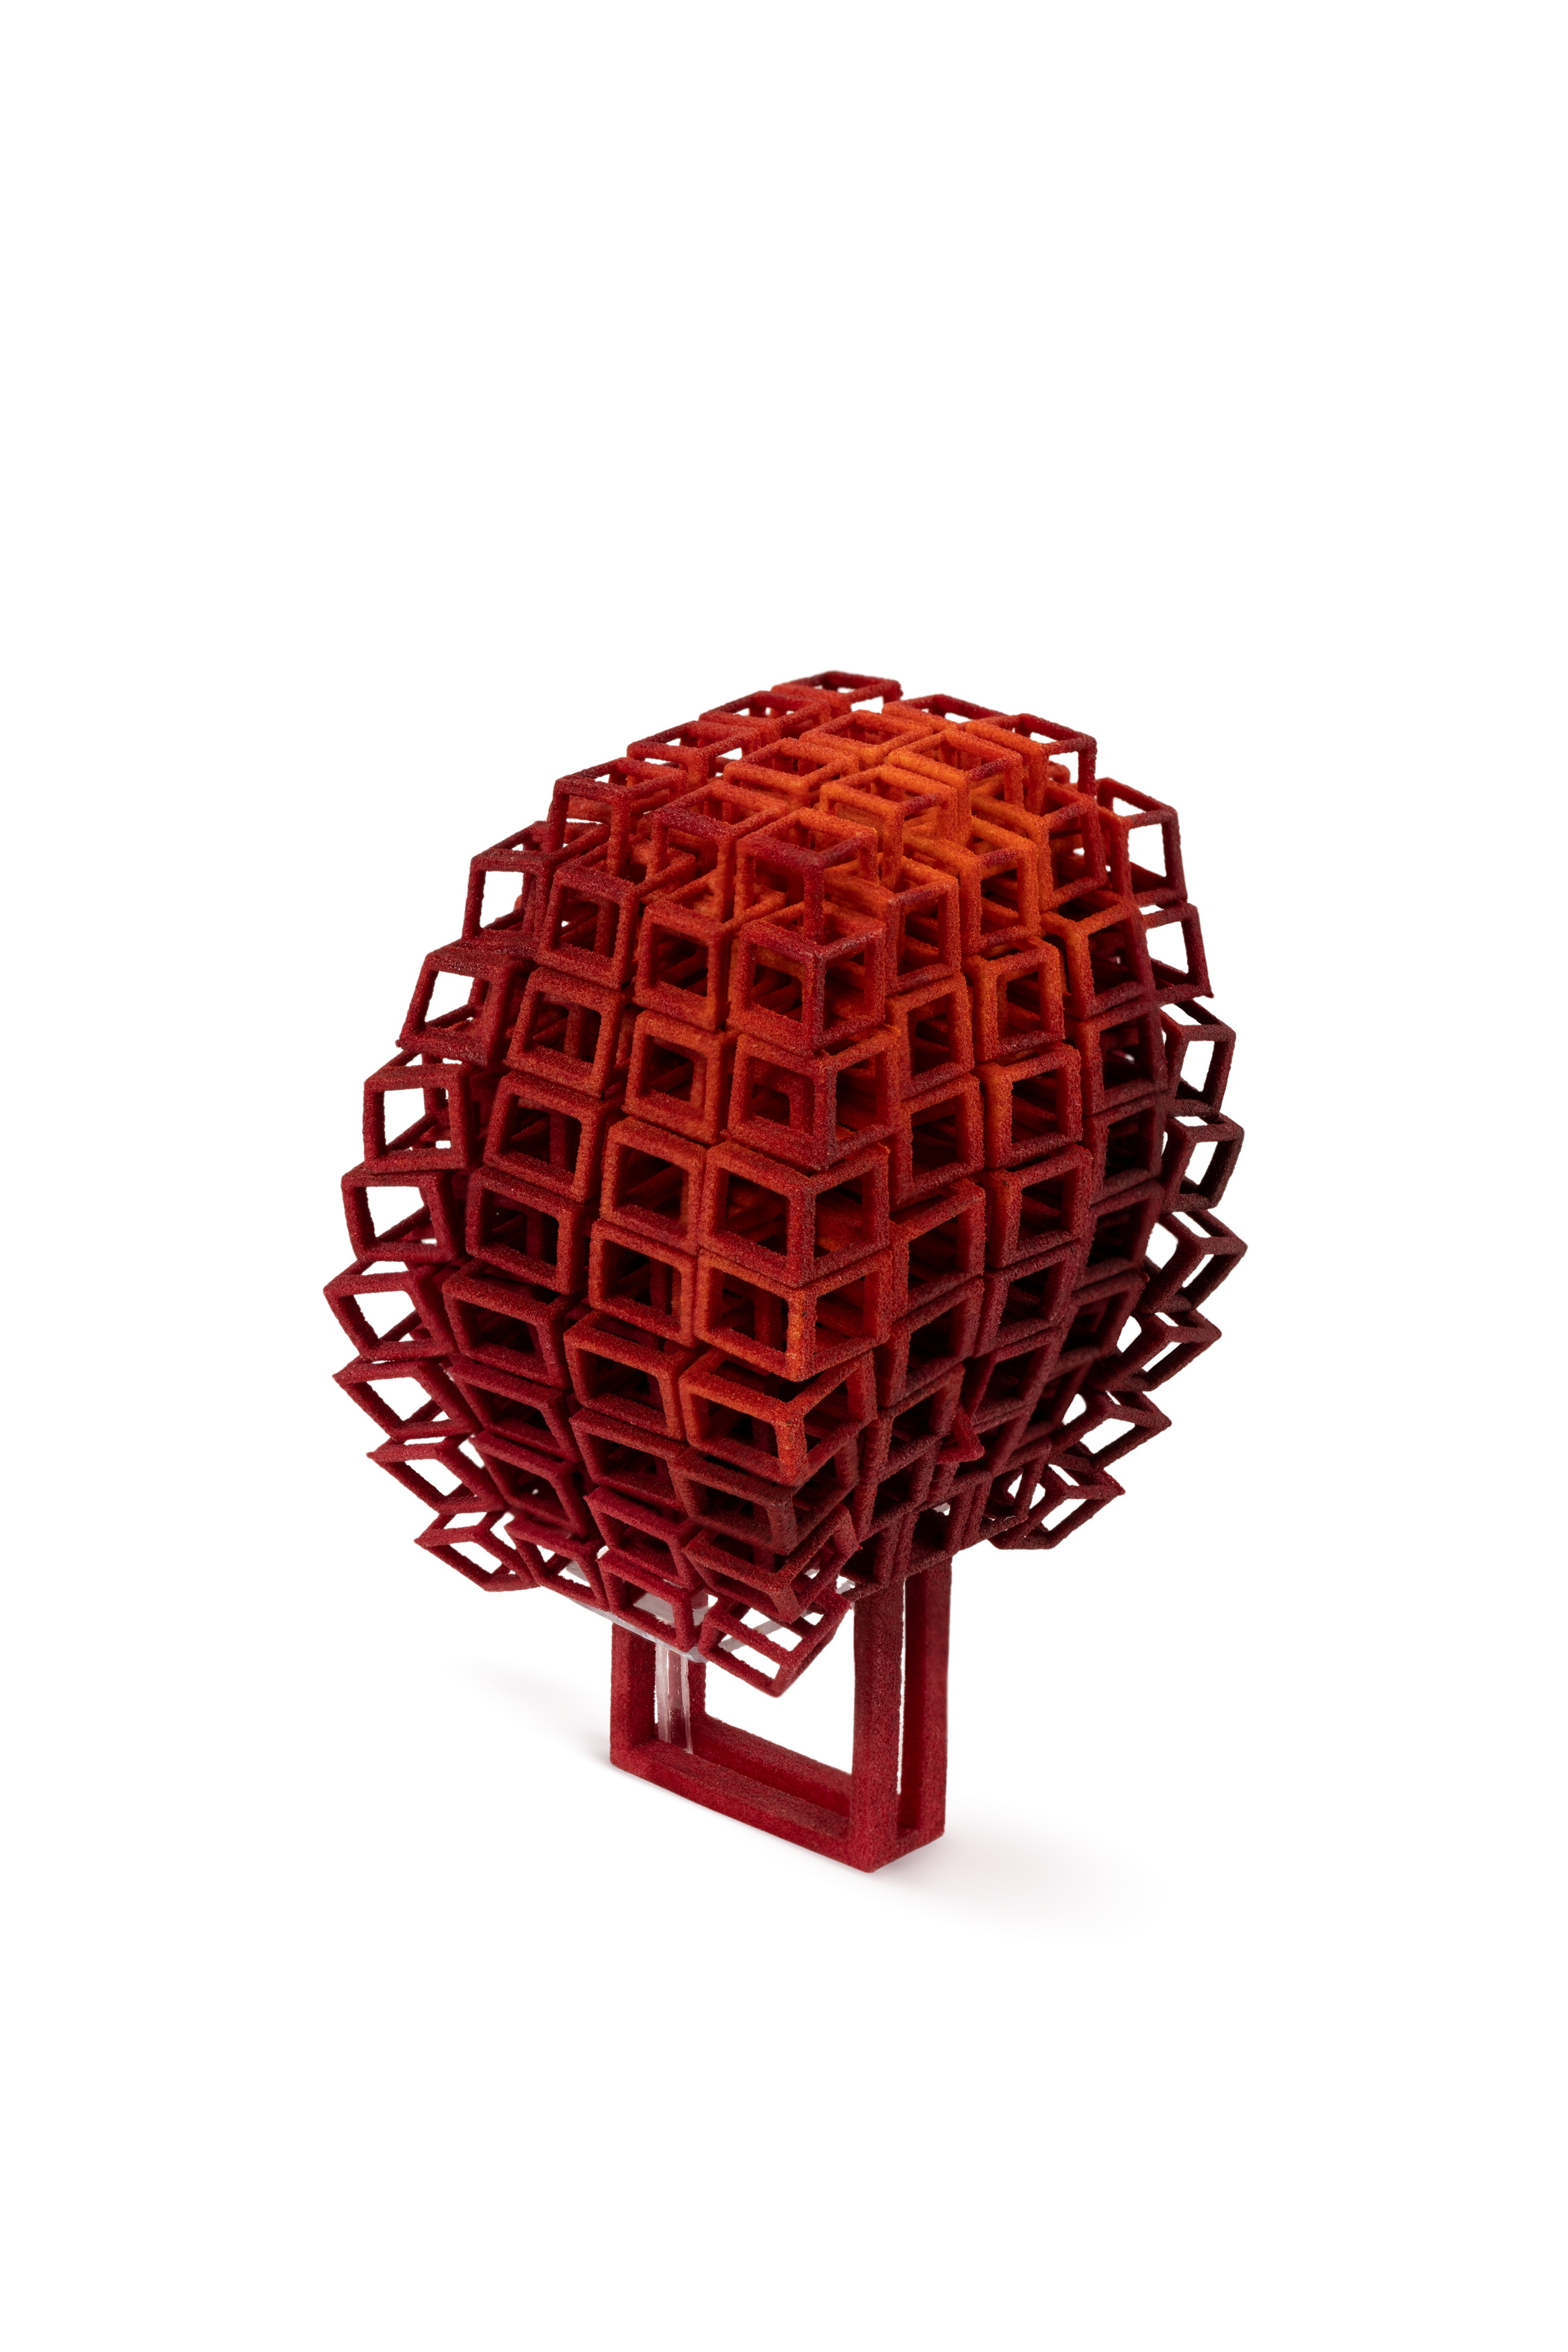 3D printed ring by Bin Dixon-Ward